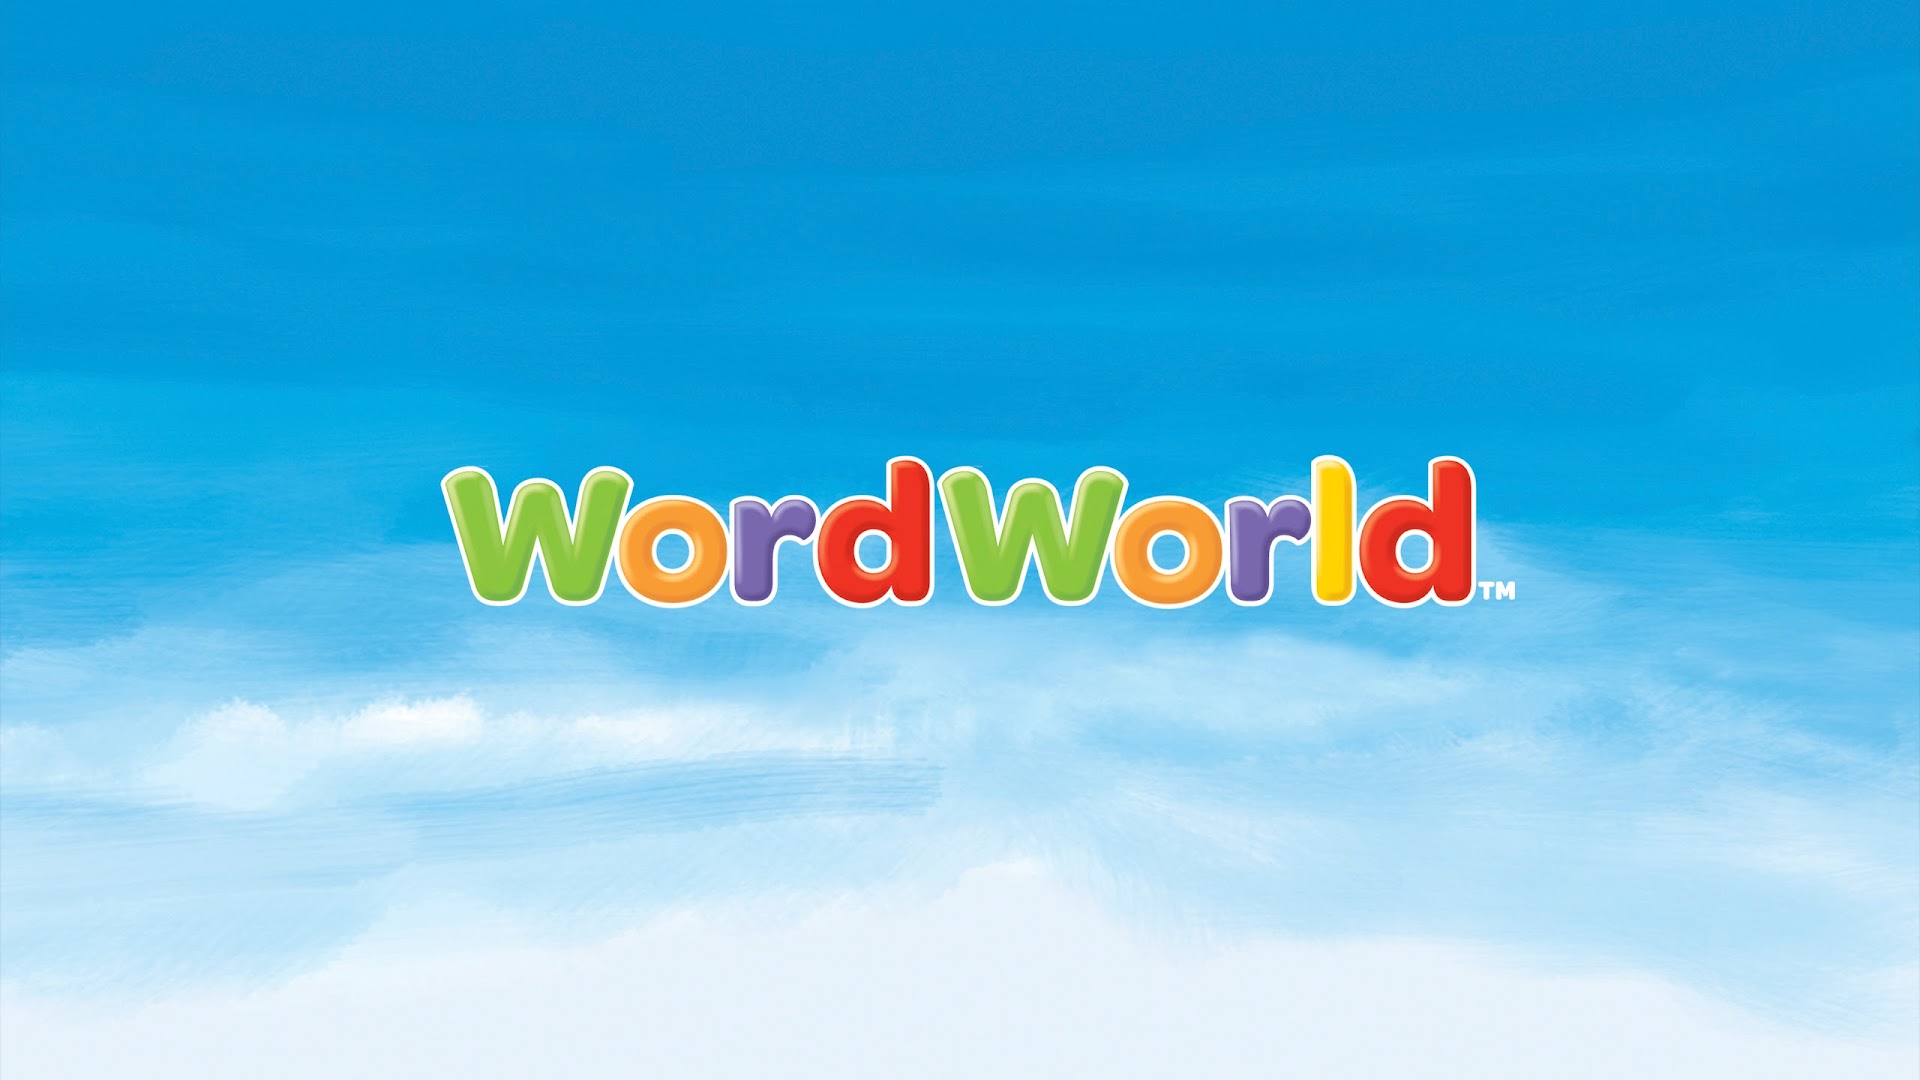 WordWorld - Wikipedia